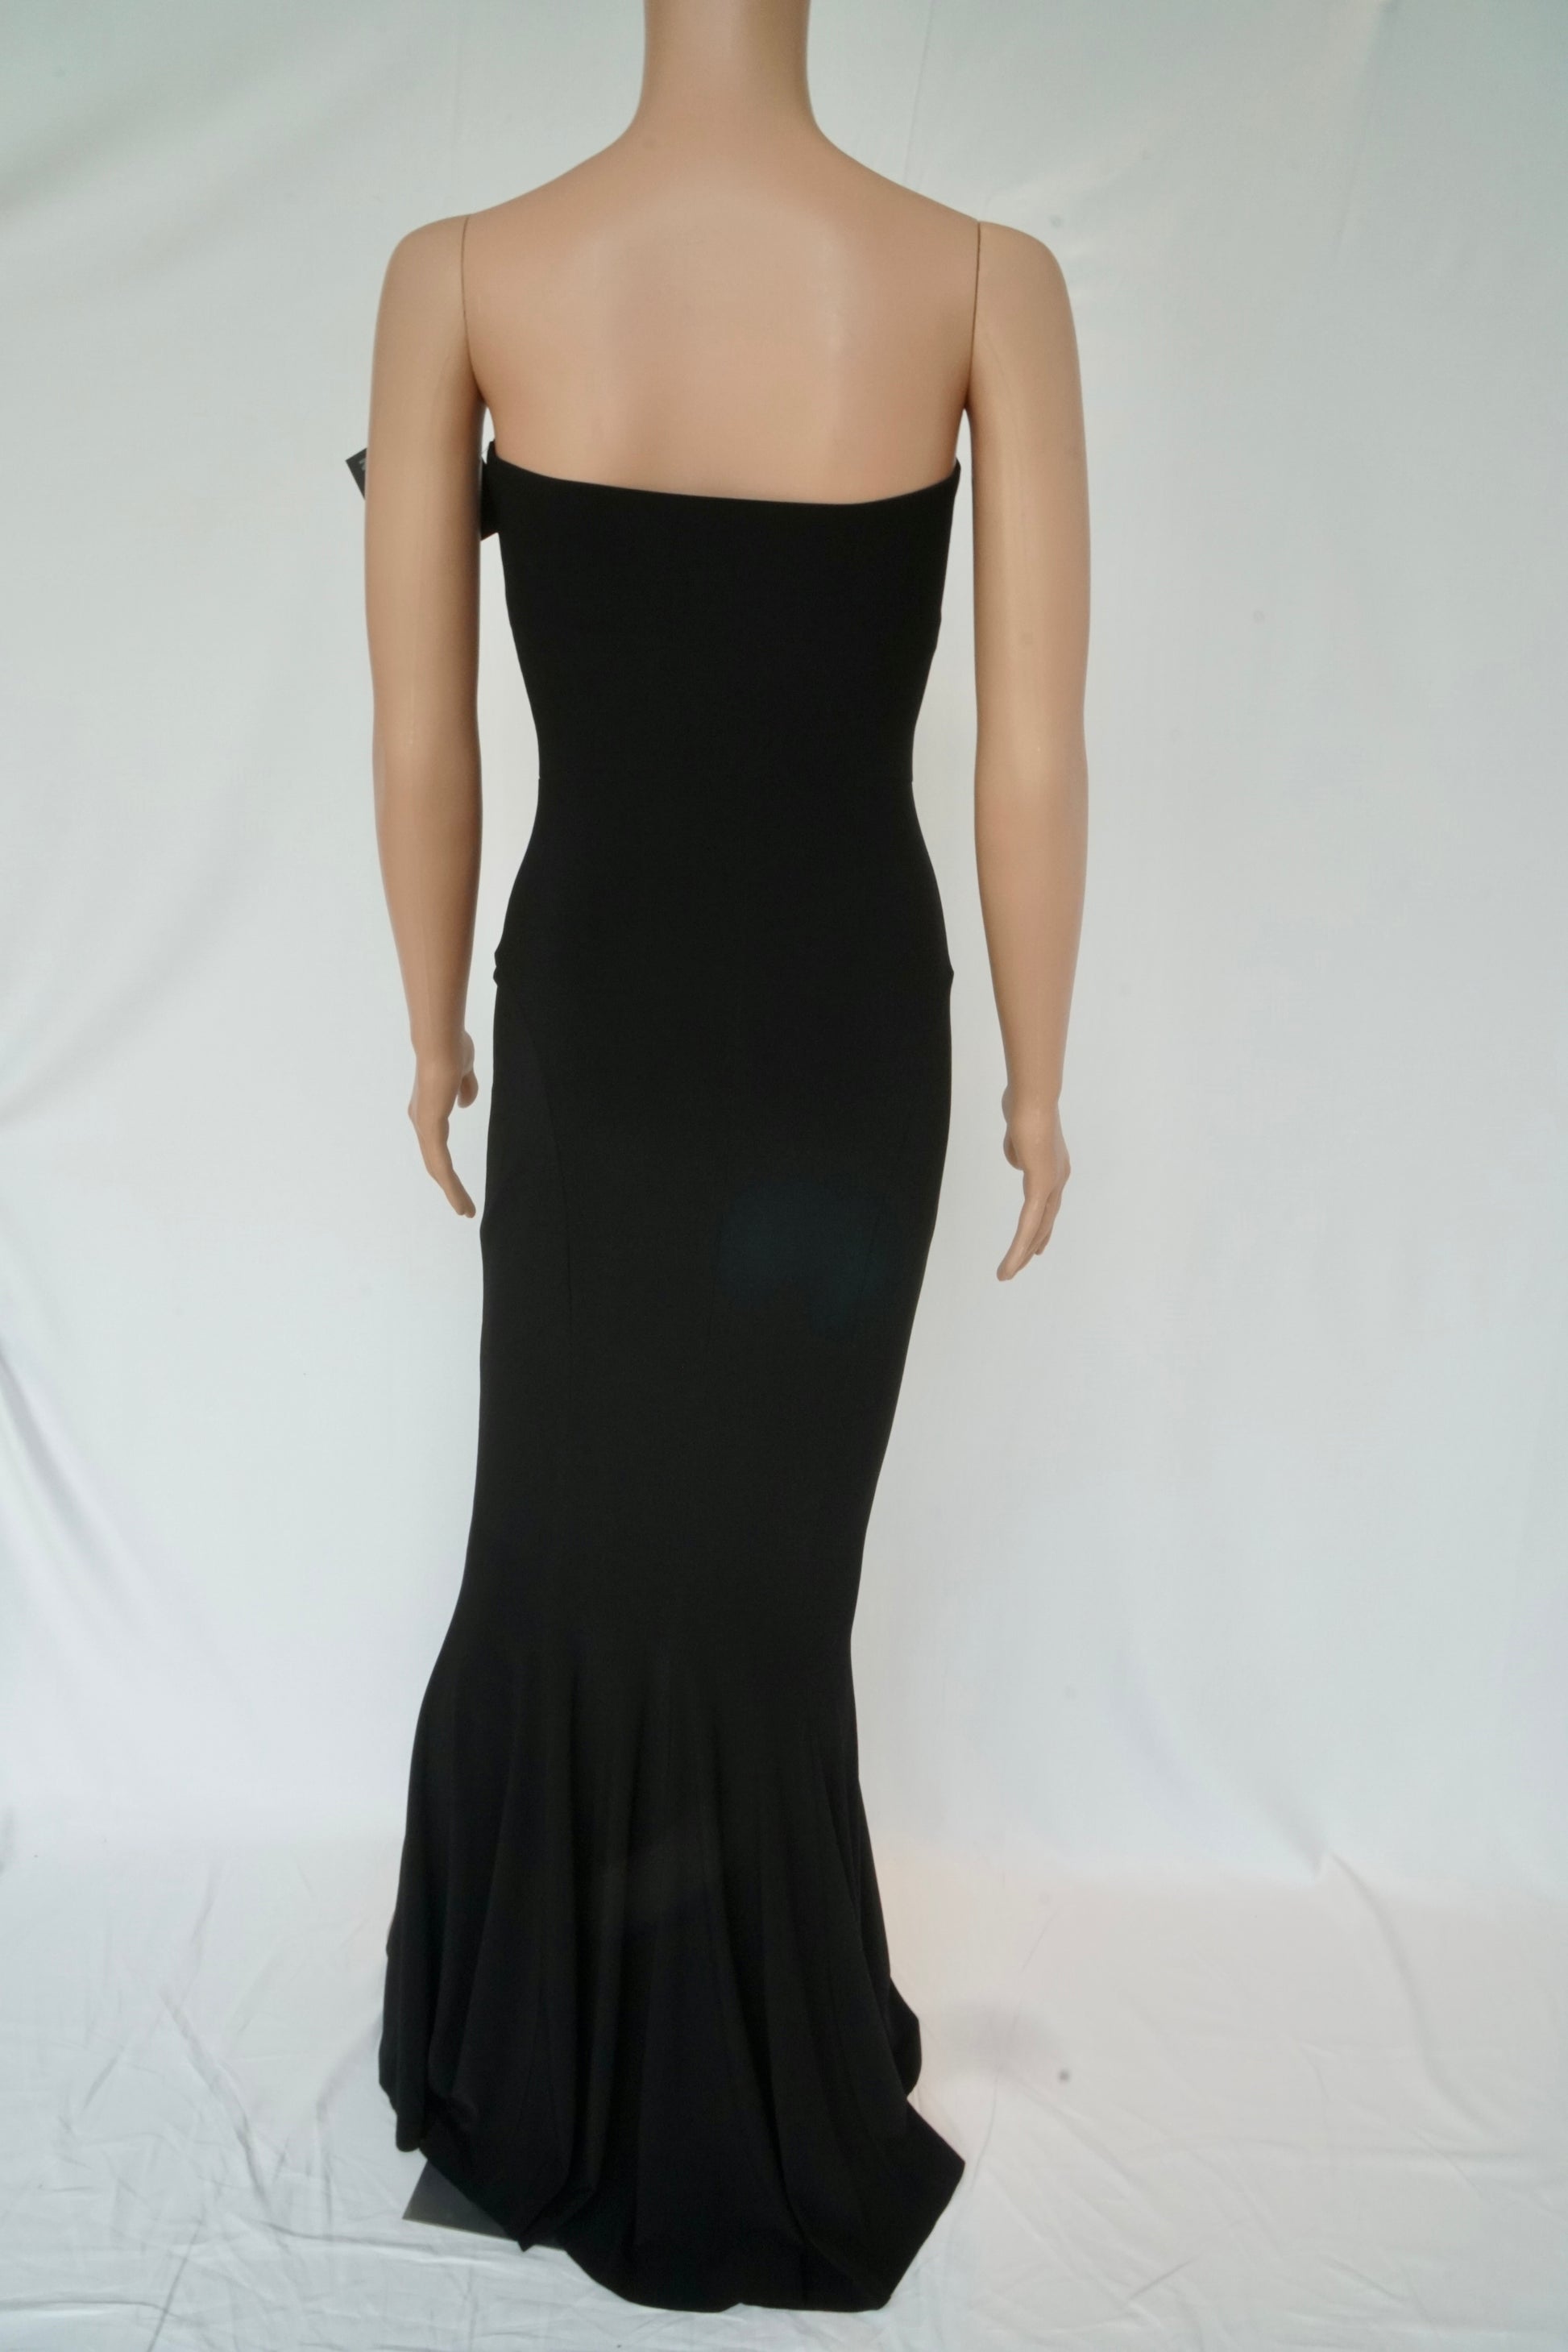 Black Strapless Fishtail Gown